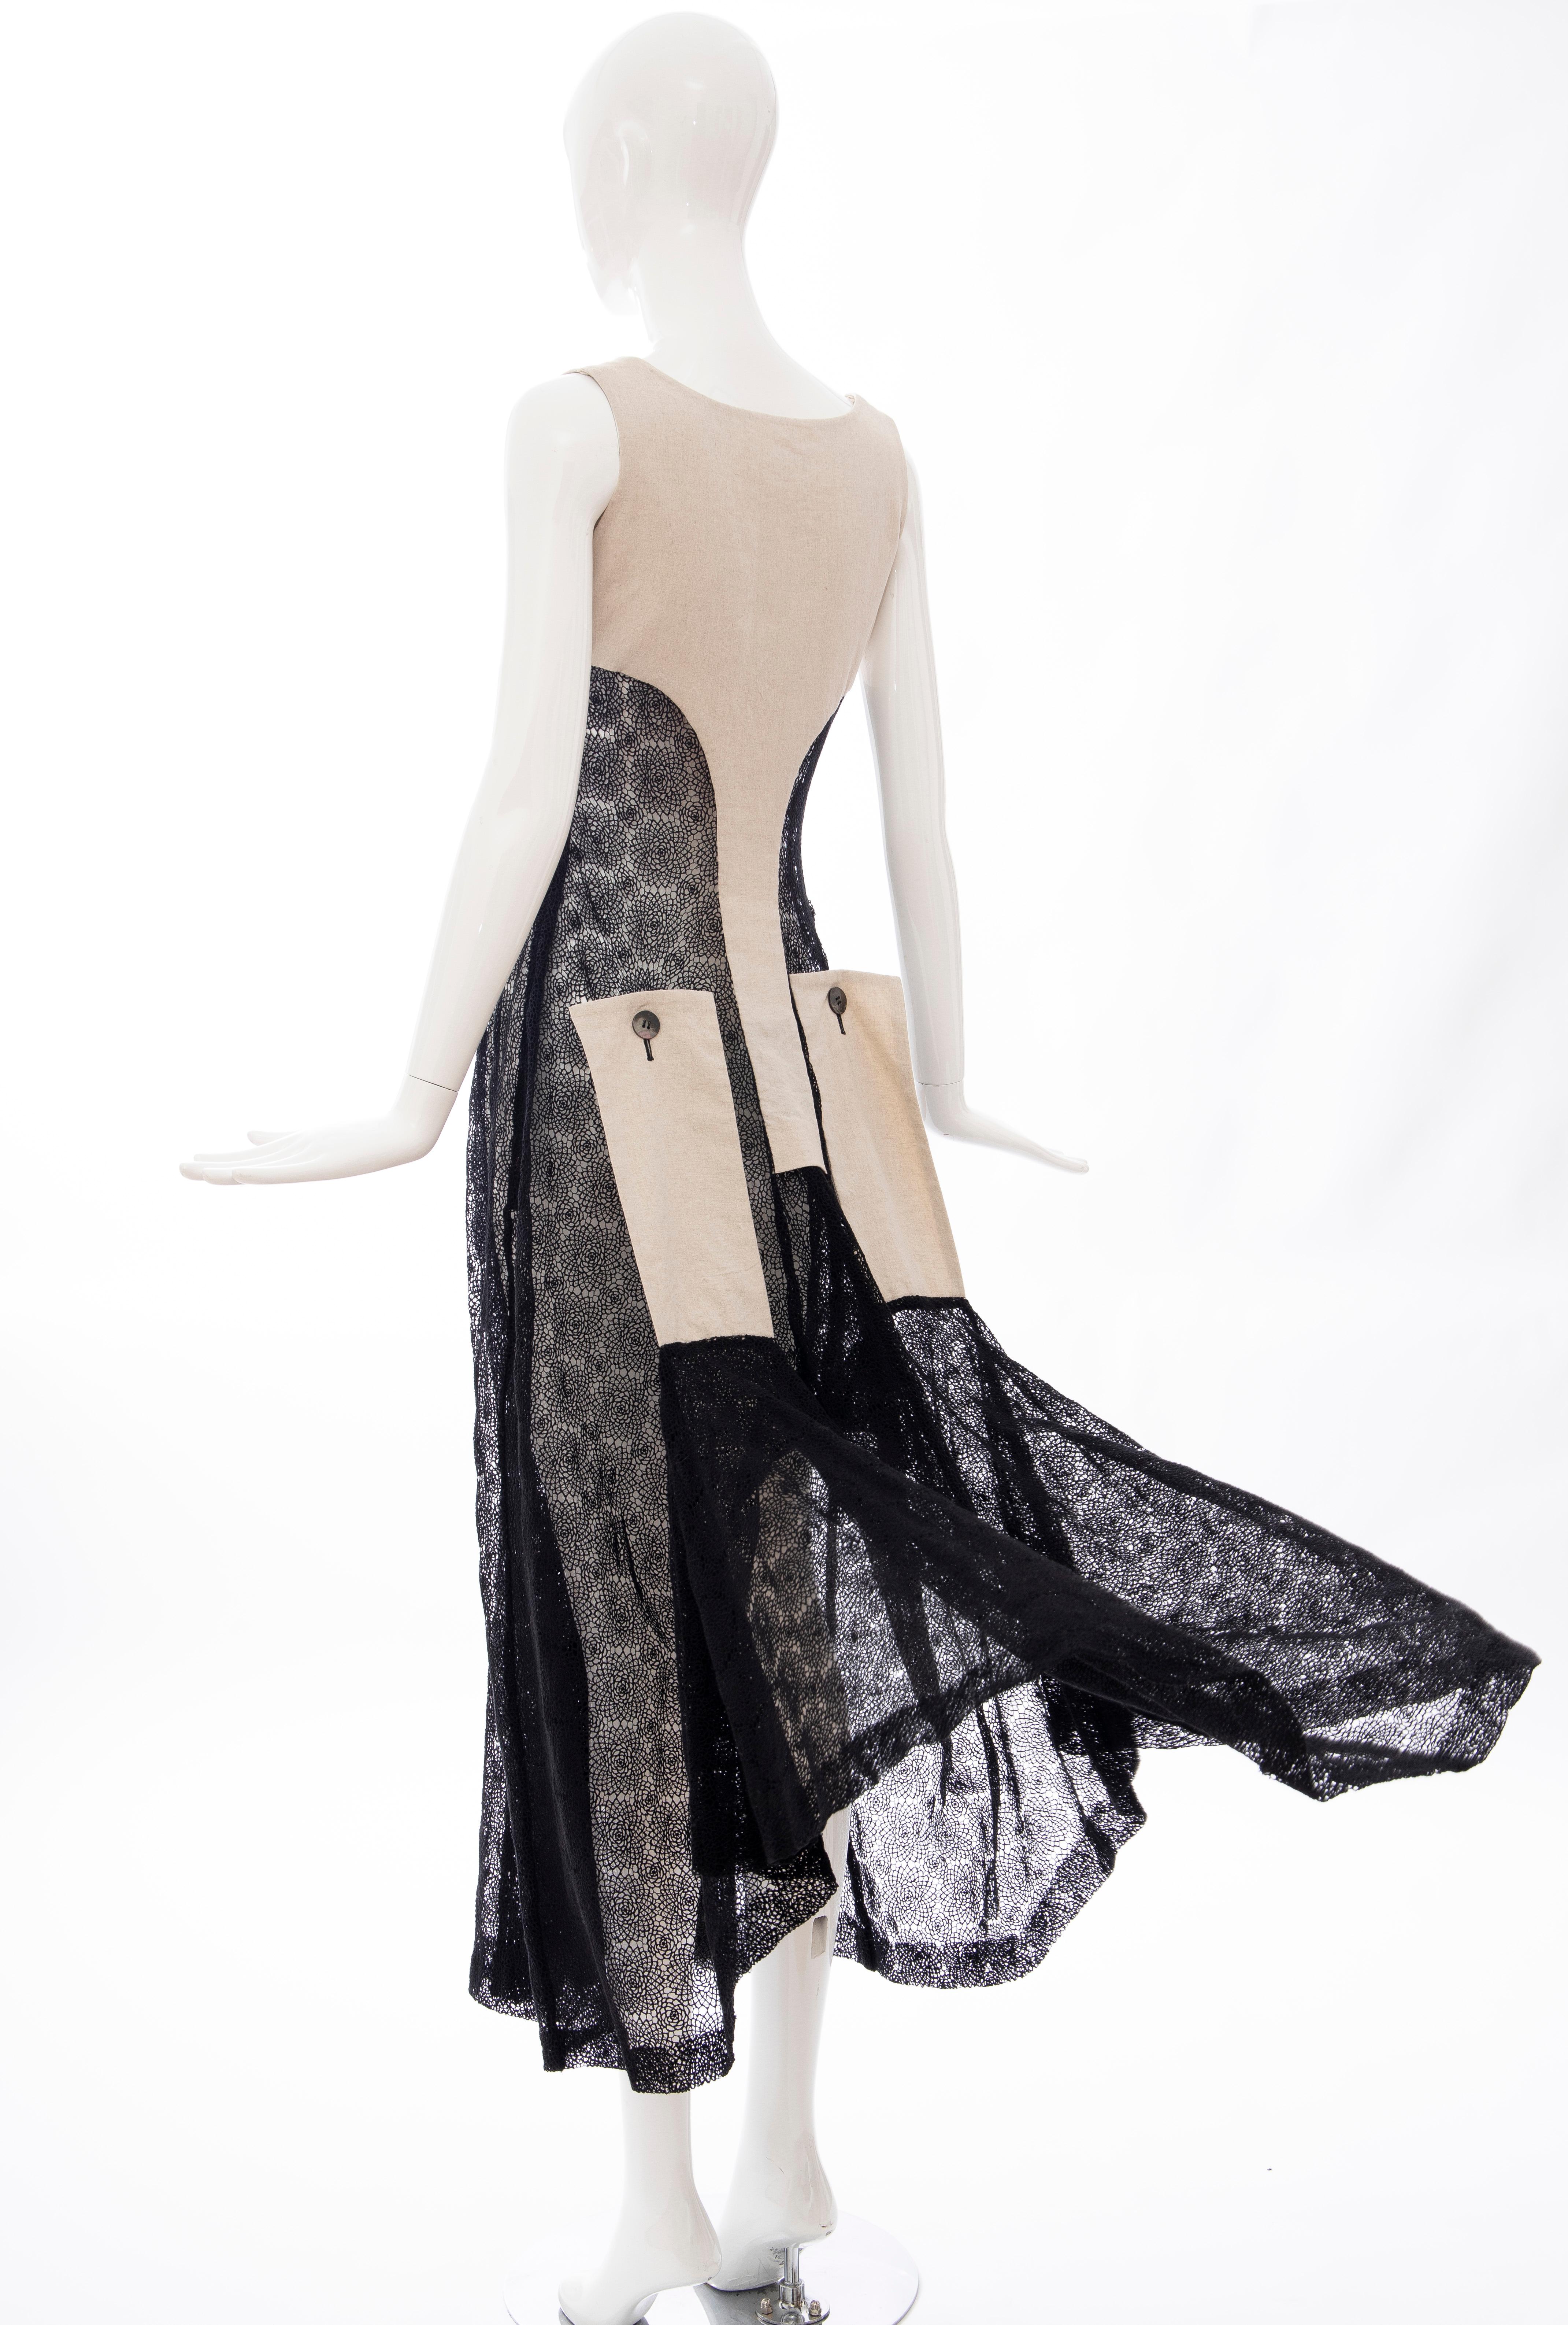 Yohji Yamamoto Runway Black Cotton Lace & Natural Linen Dress, Spring 2005 10